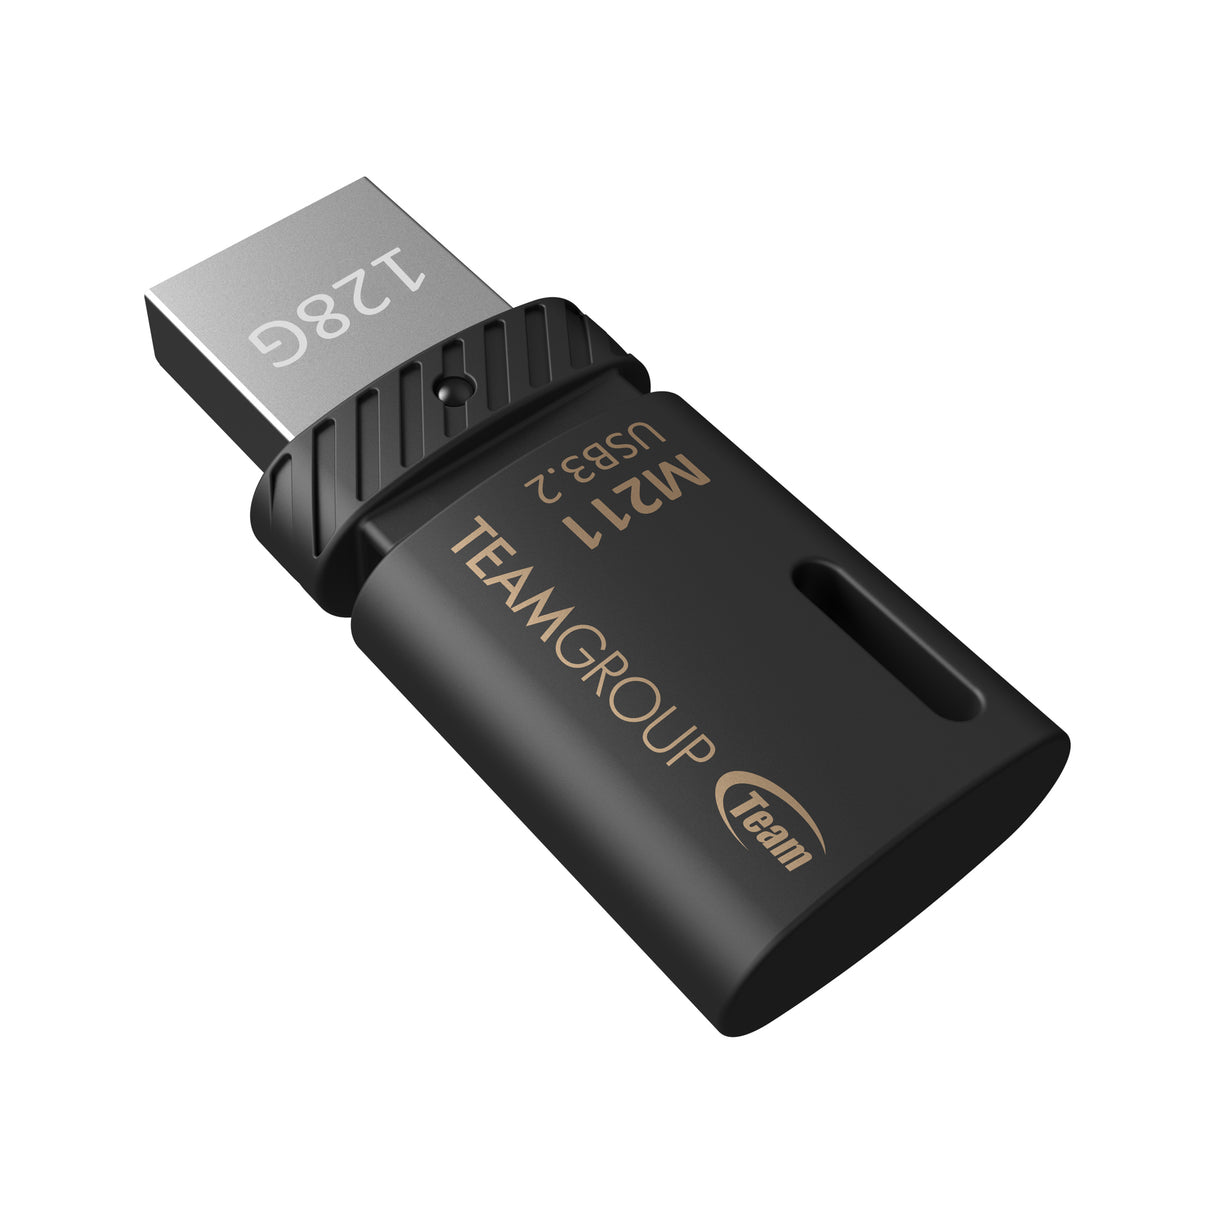 Teamgroup 128GB M211 OTG USB 3.2 spominski ključek